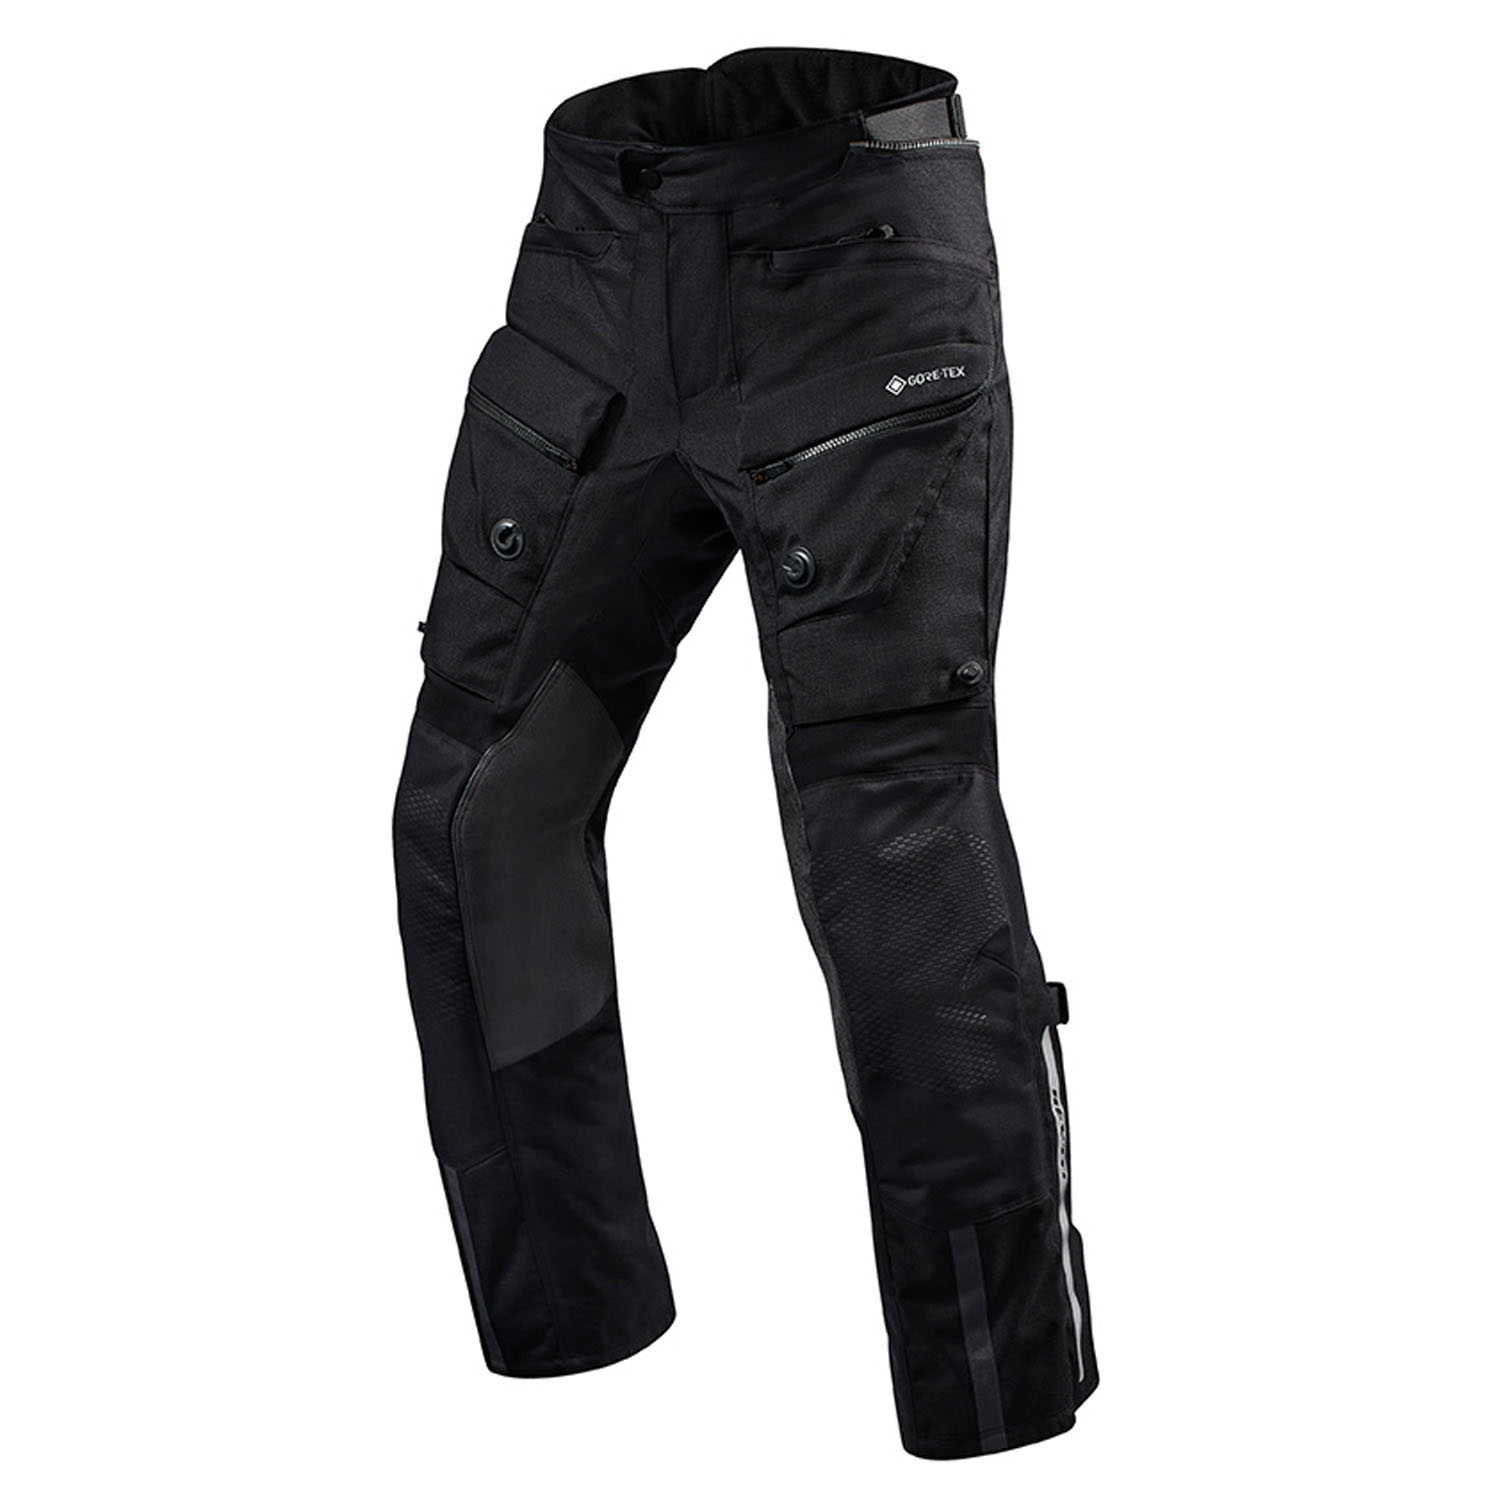 Image of REV'IT! Trousers Defender 3 GTX Black Long Motorcycle Pants Talla 2XL